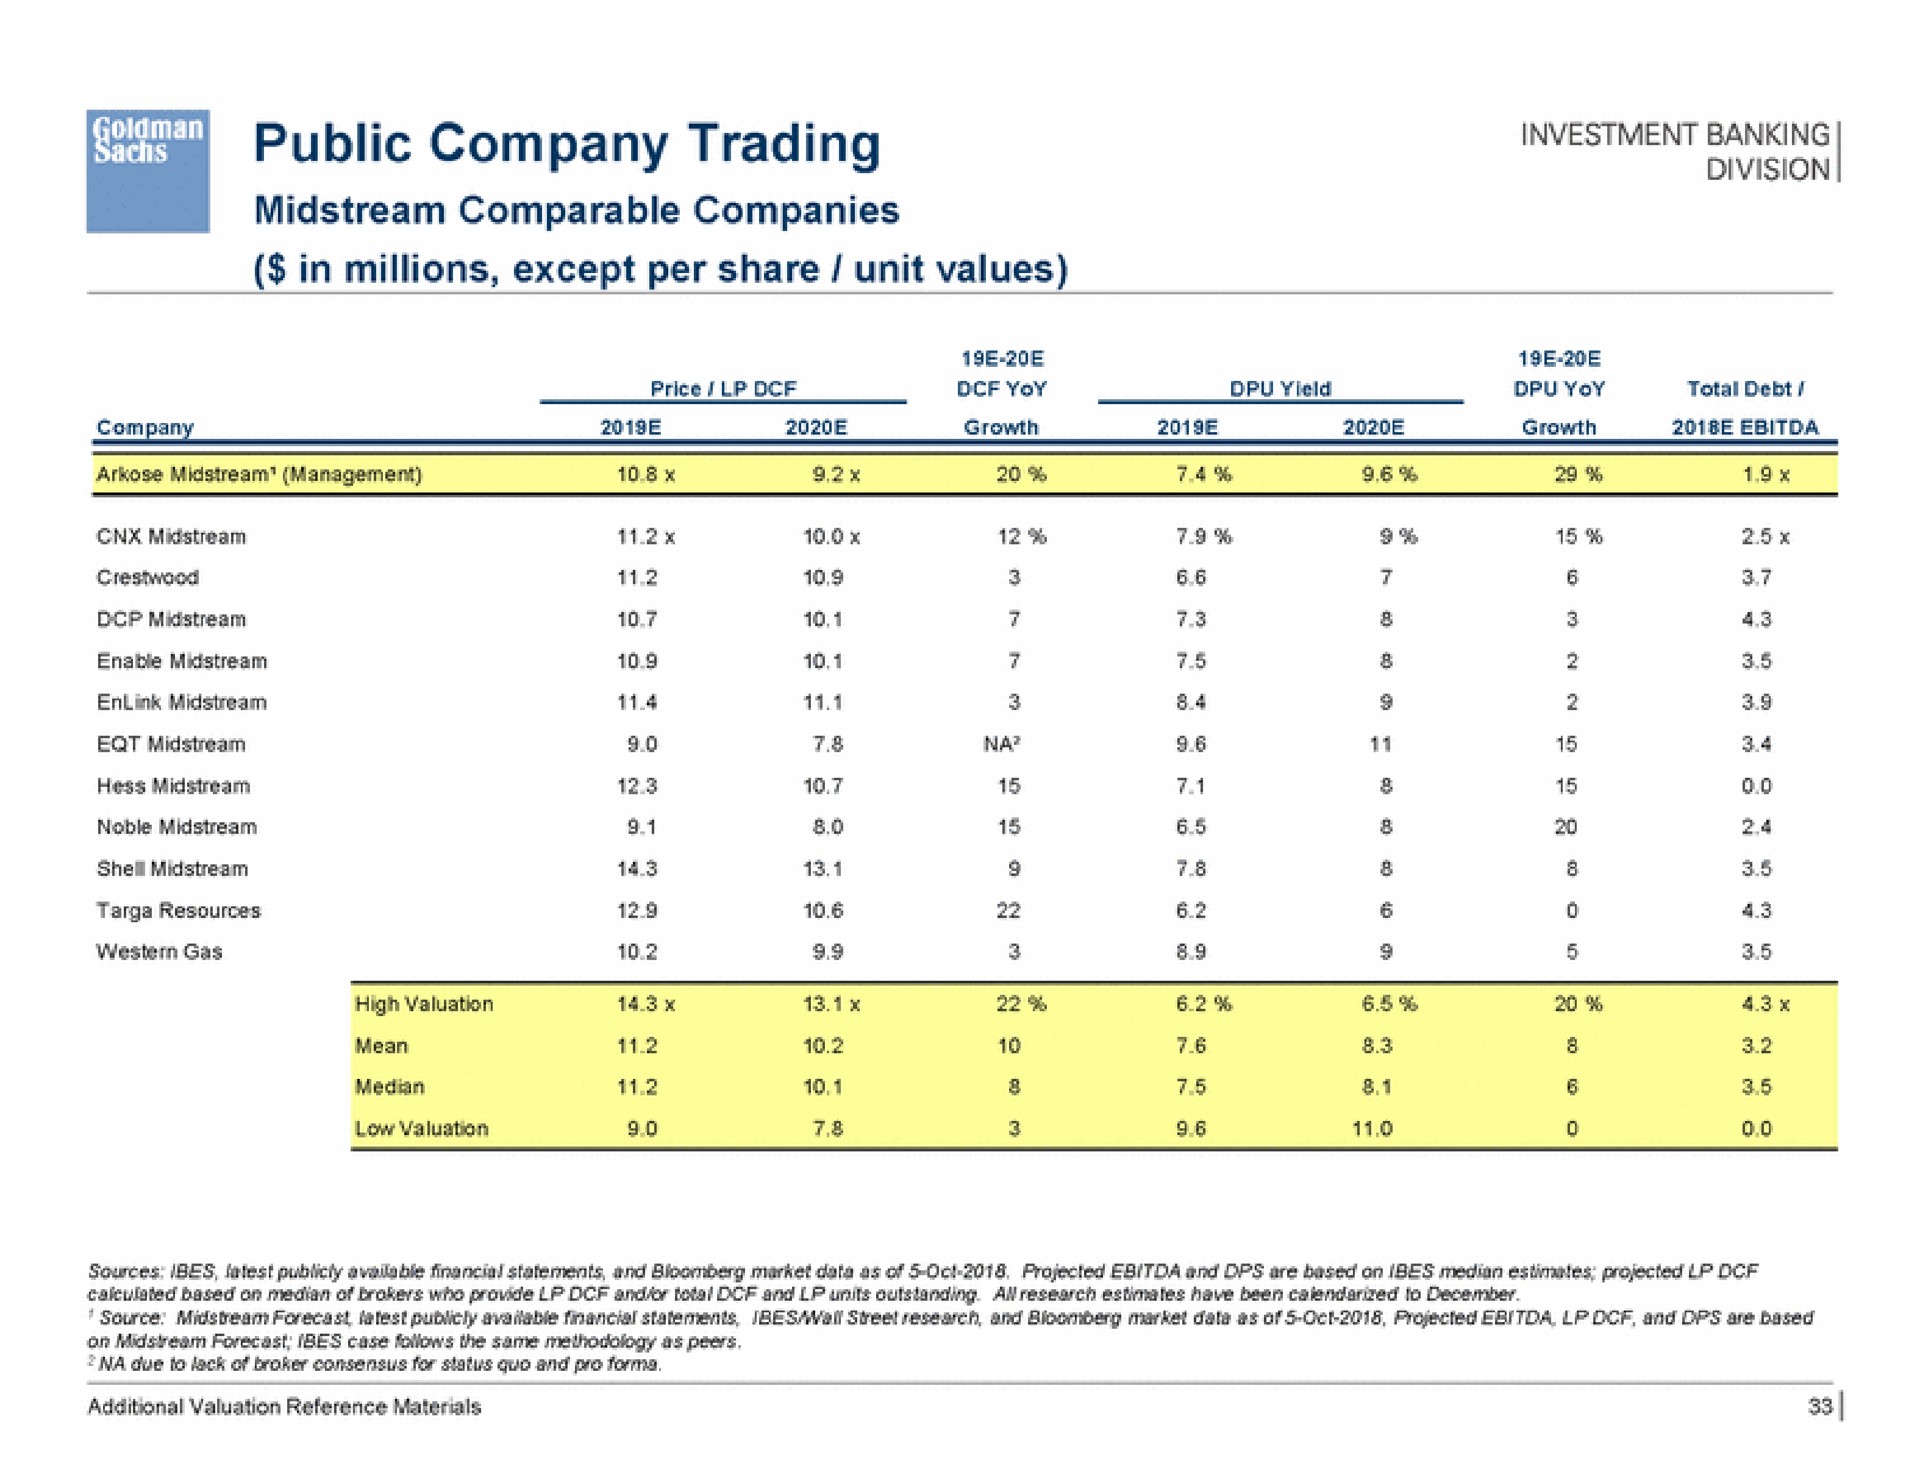 public company trading pees | Goldman Sachs